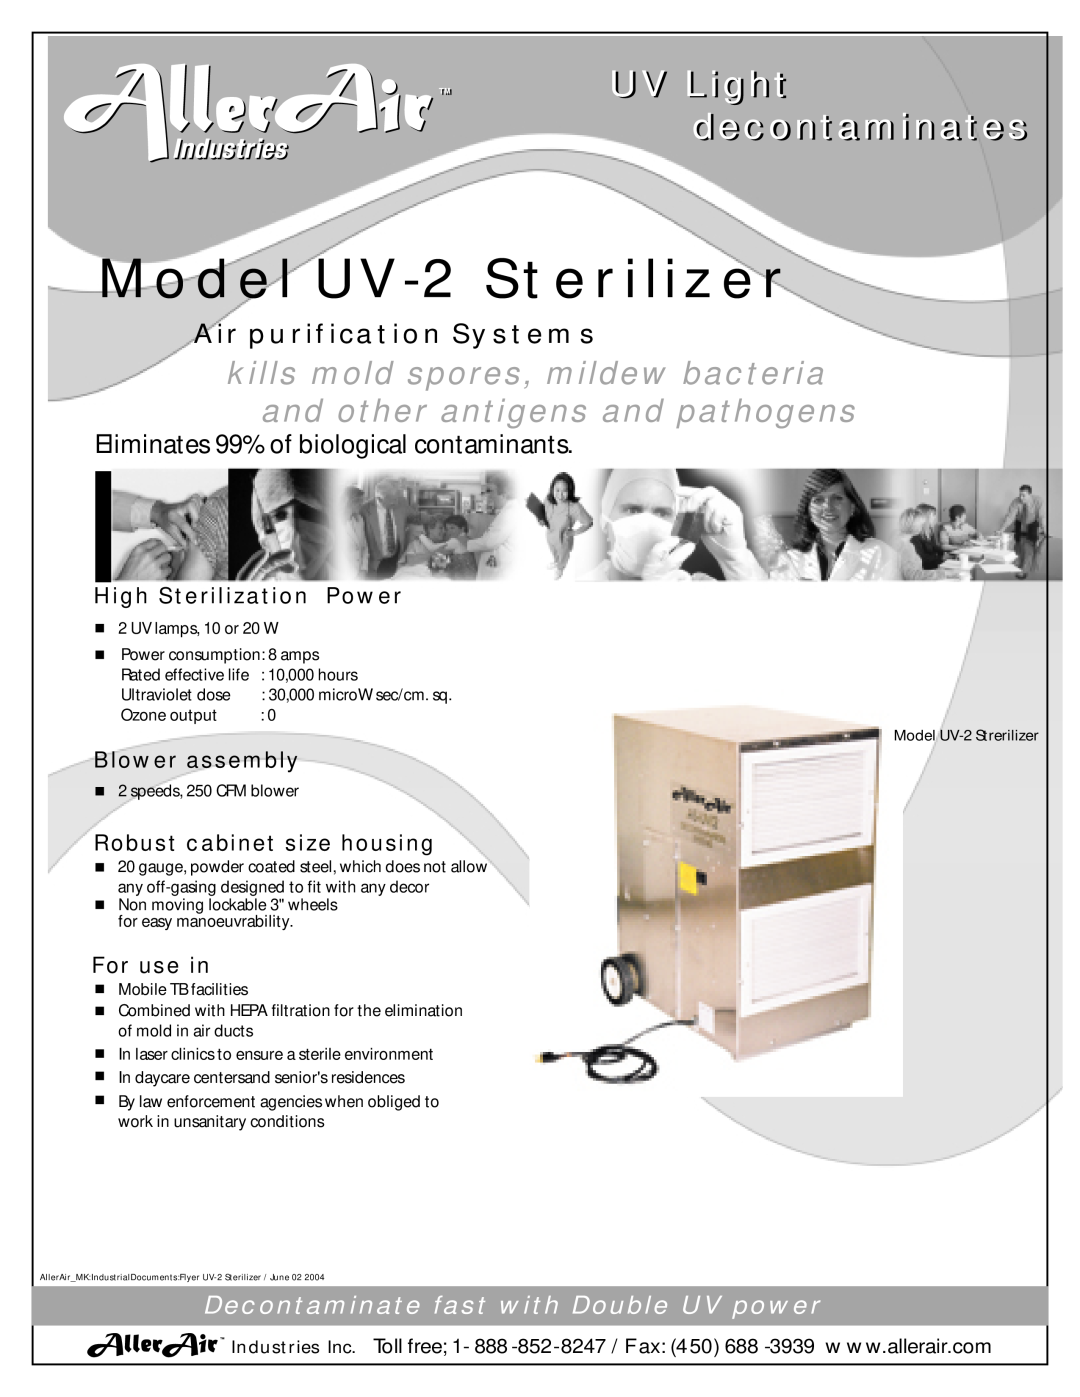 AllerAir UV-2 Sterilizer manual Model UV-2Sterilizer, UV Light decontaminates, Air purification Systems, Blower assembly 